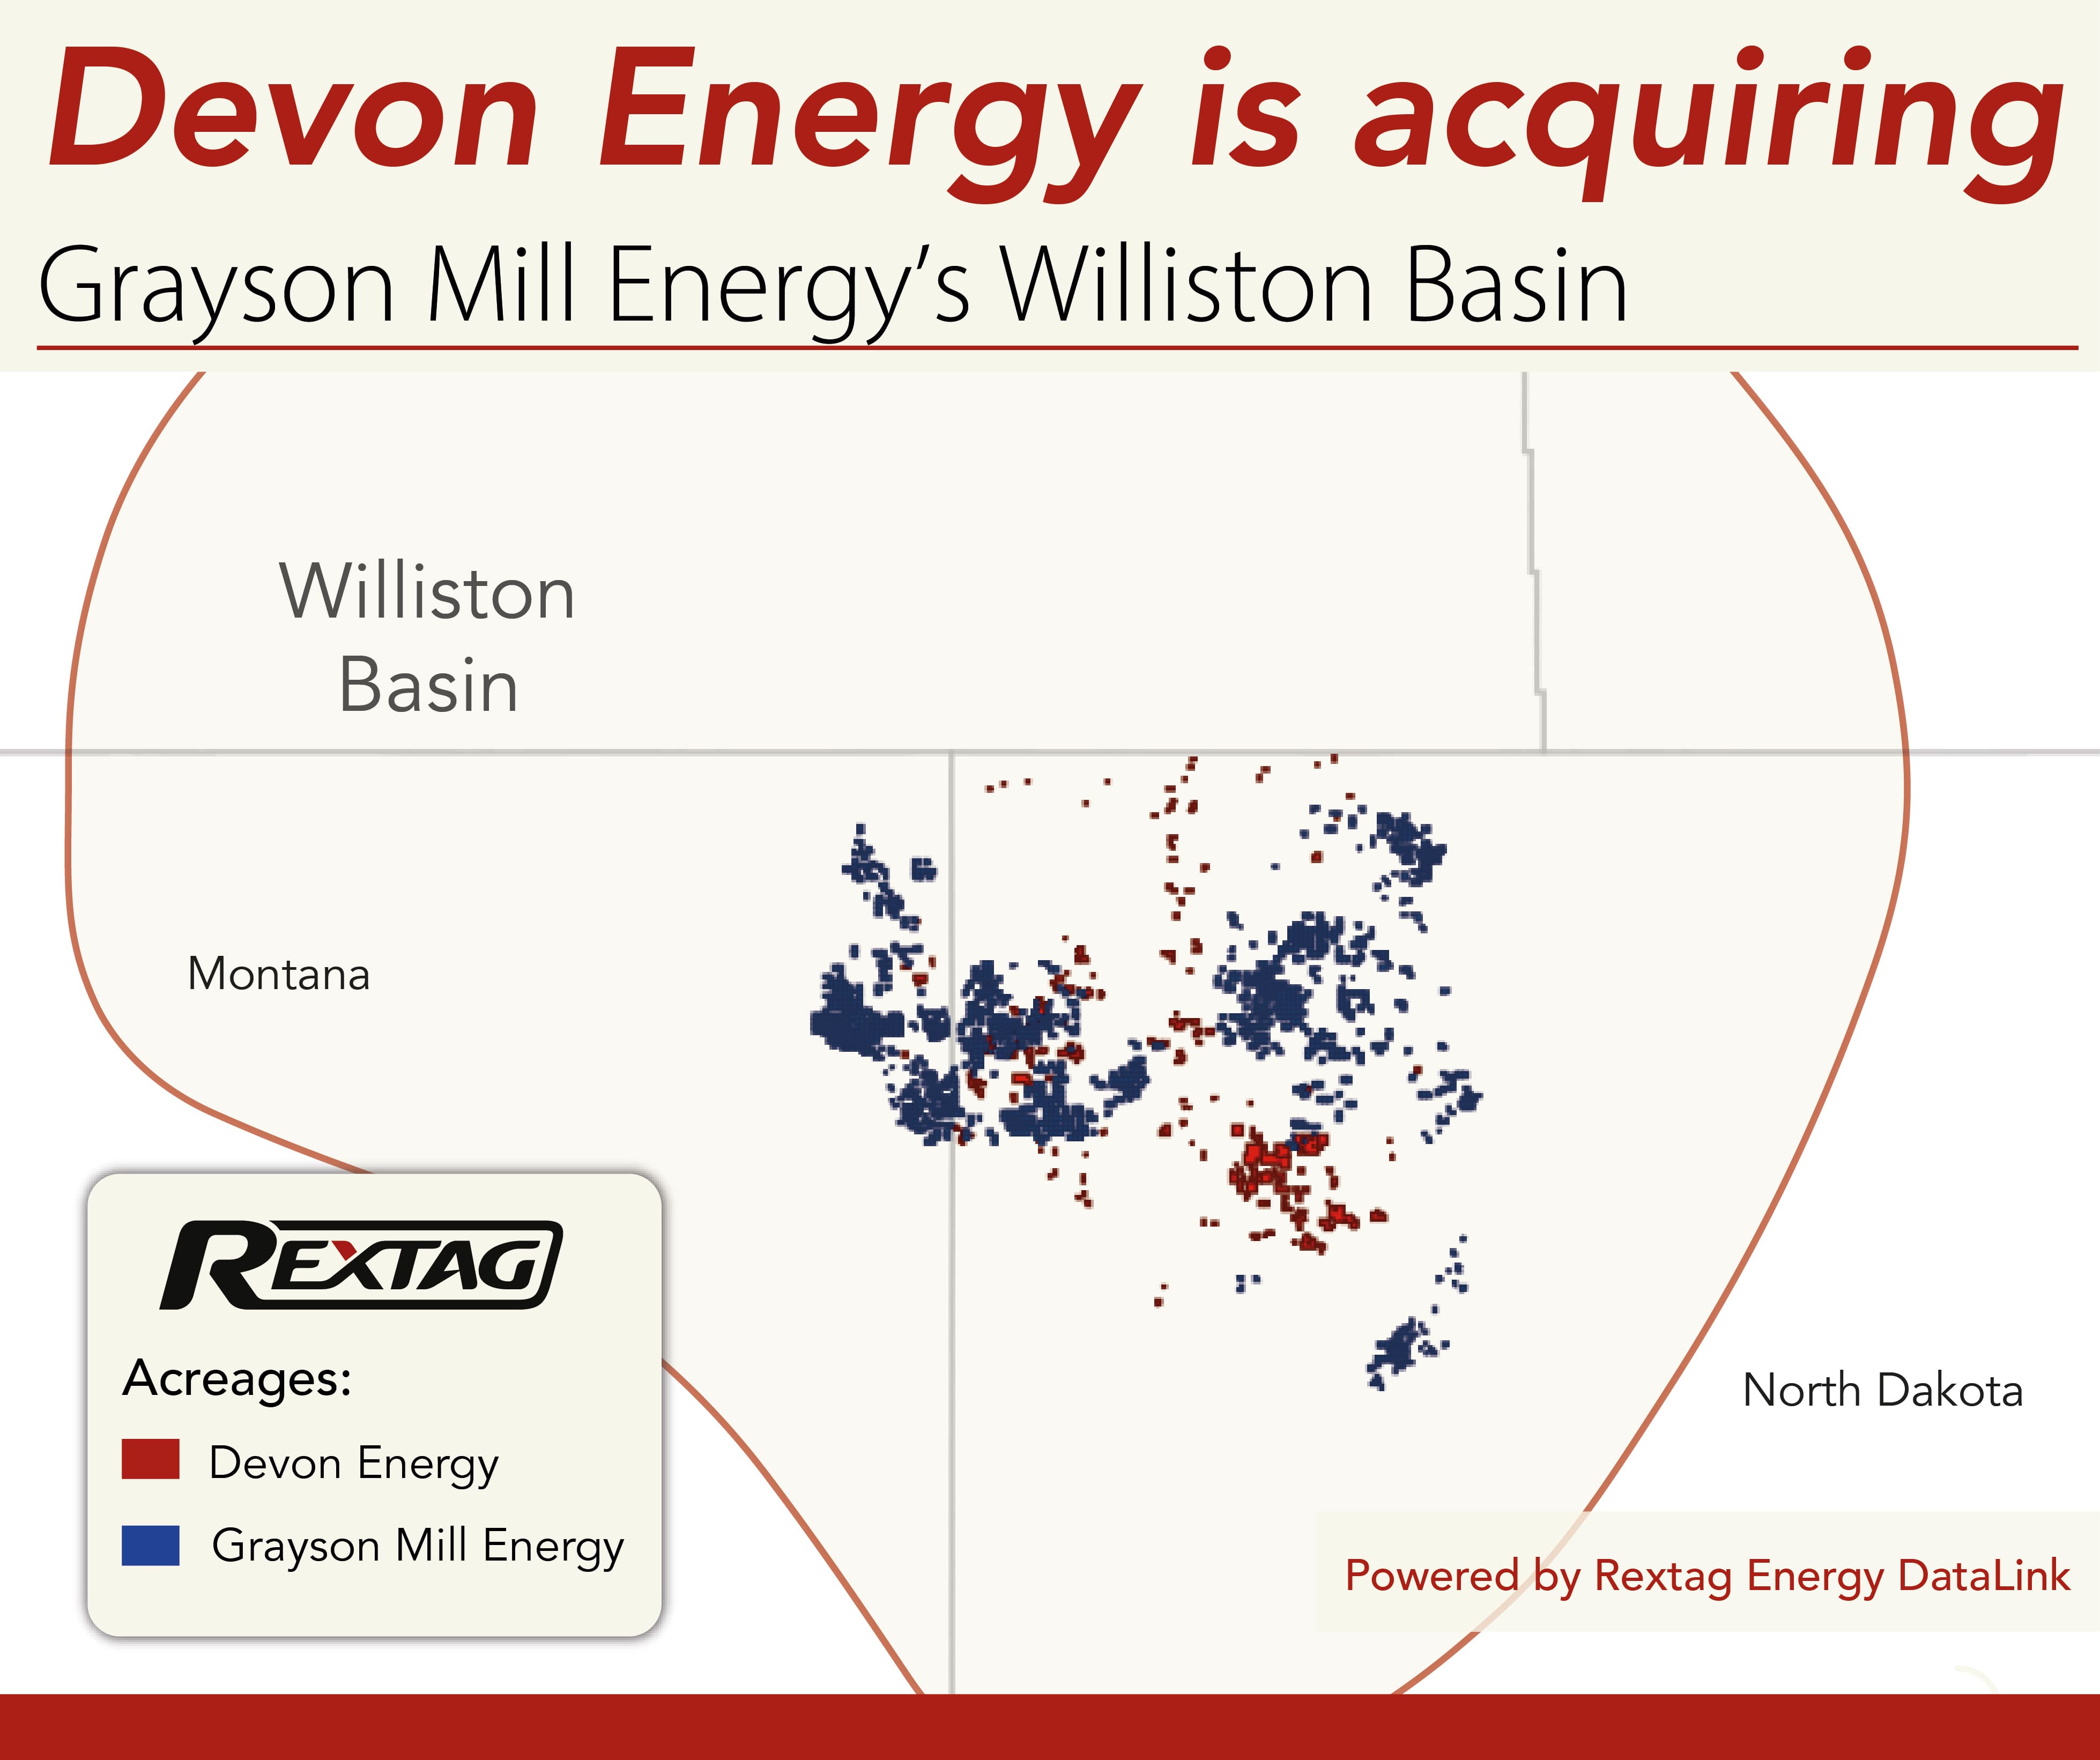 5-Billion-Grayson-Mill-Deal-Expands